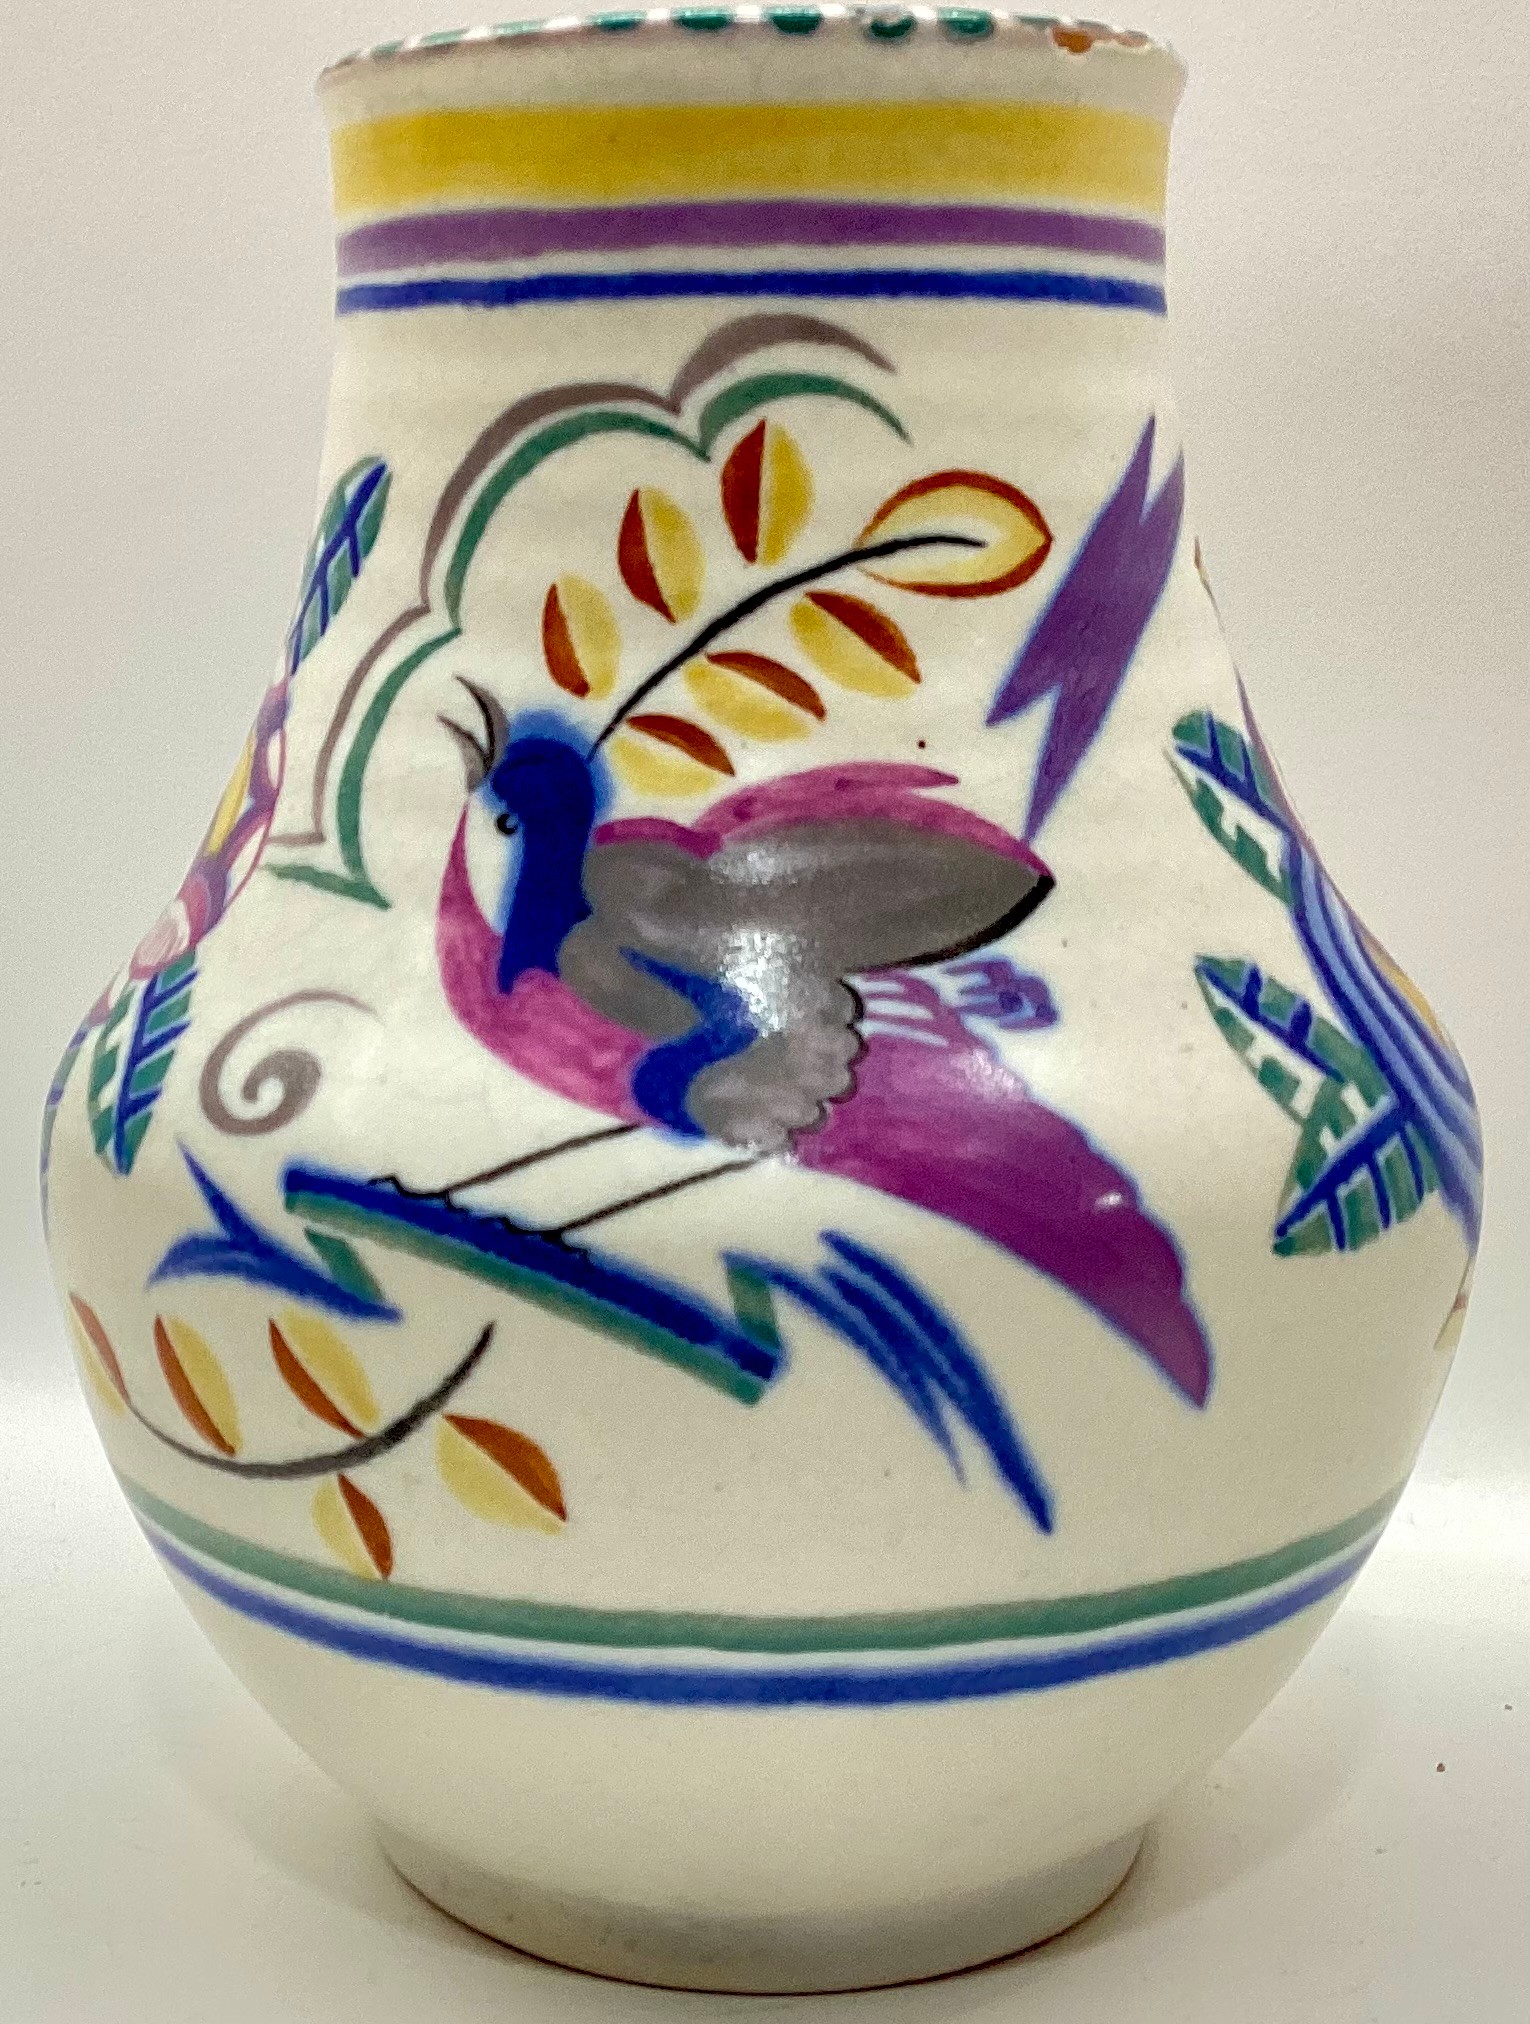 Poole Pottery Carter Stabler Adams shape 203 JS pattern vase depicting a purple bird (made